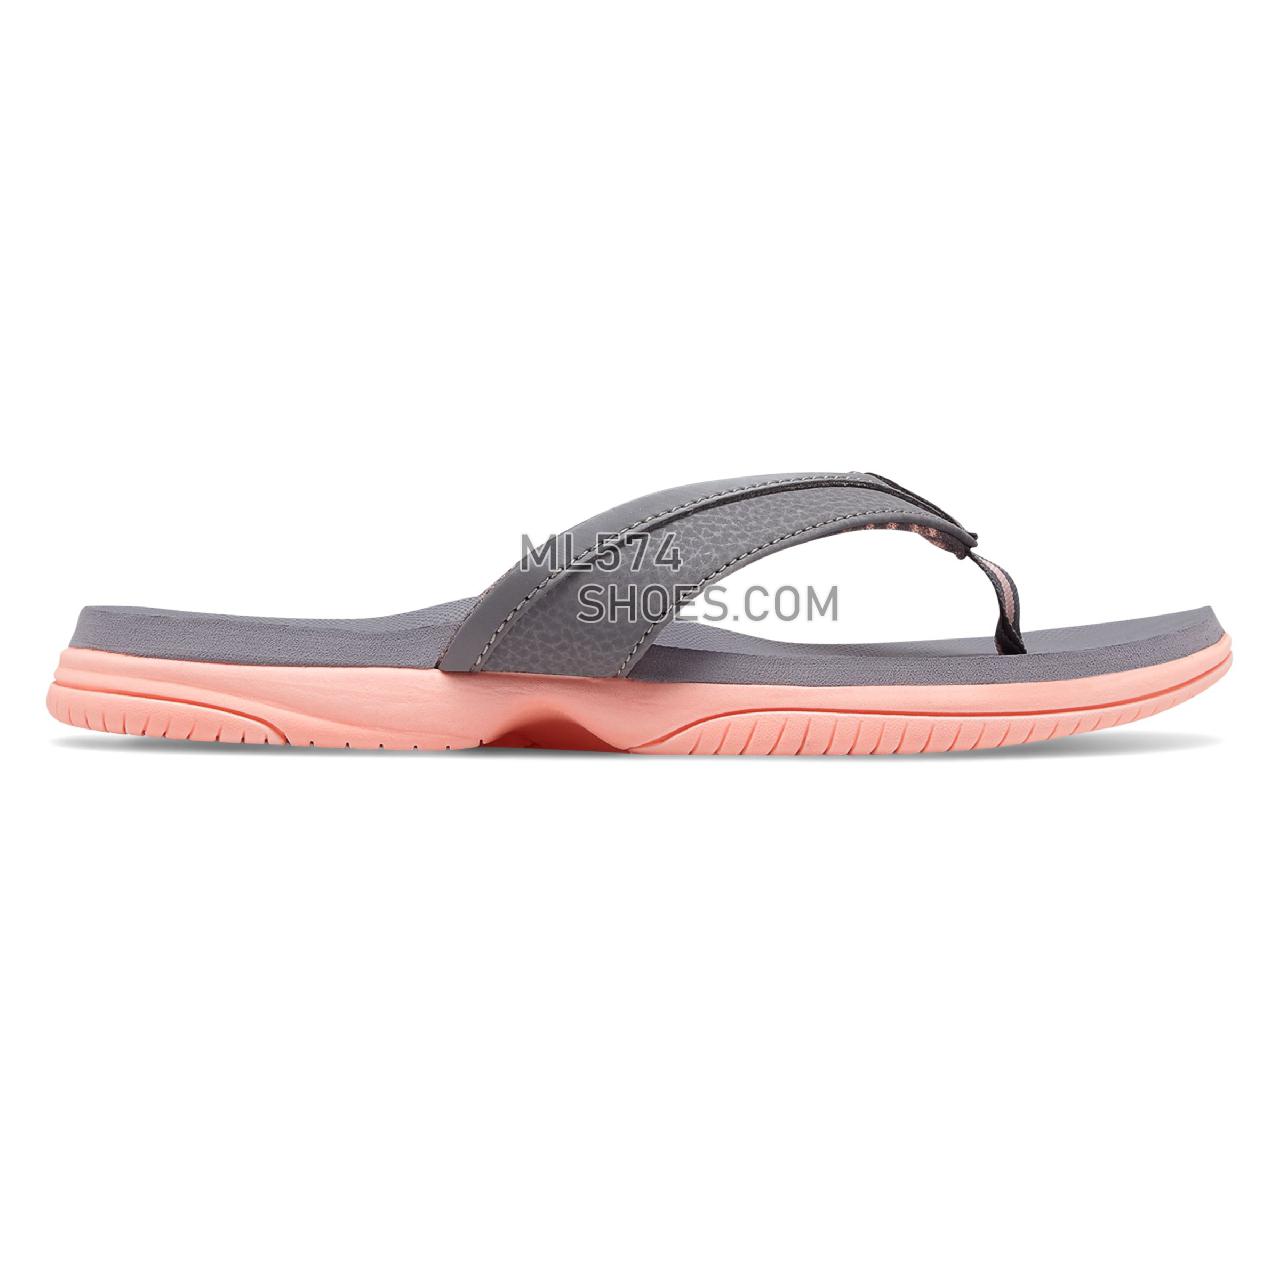 New Balance Jojo Thong - Women's 6090 - Sandals Light Grey with Pink - W6090GRP